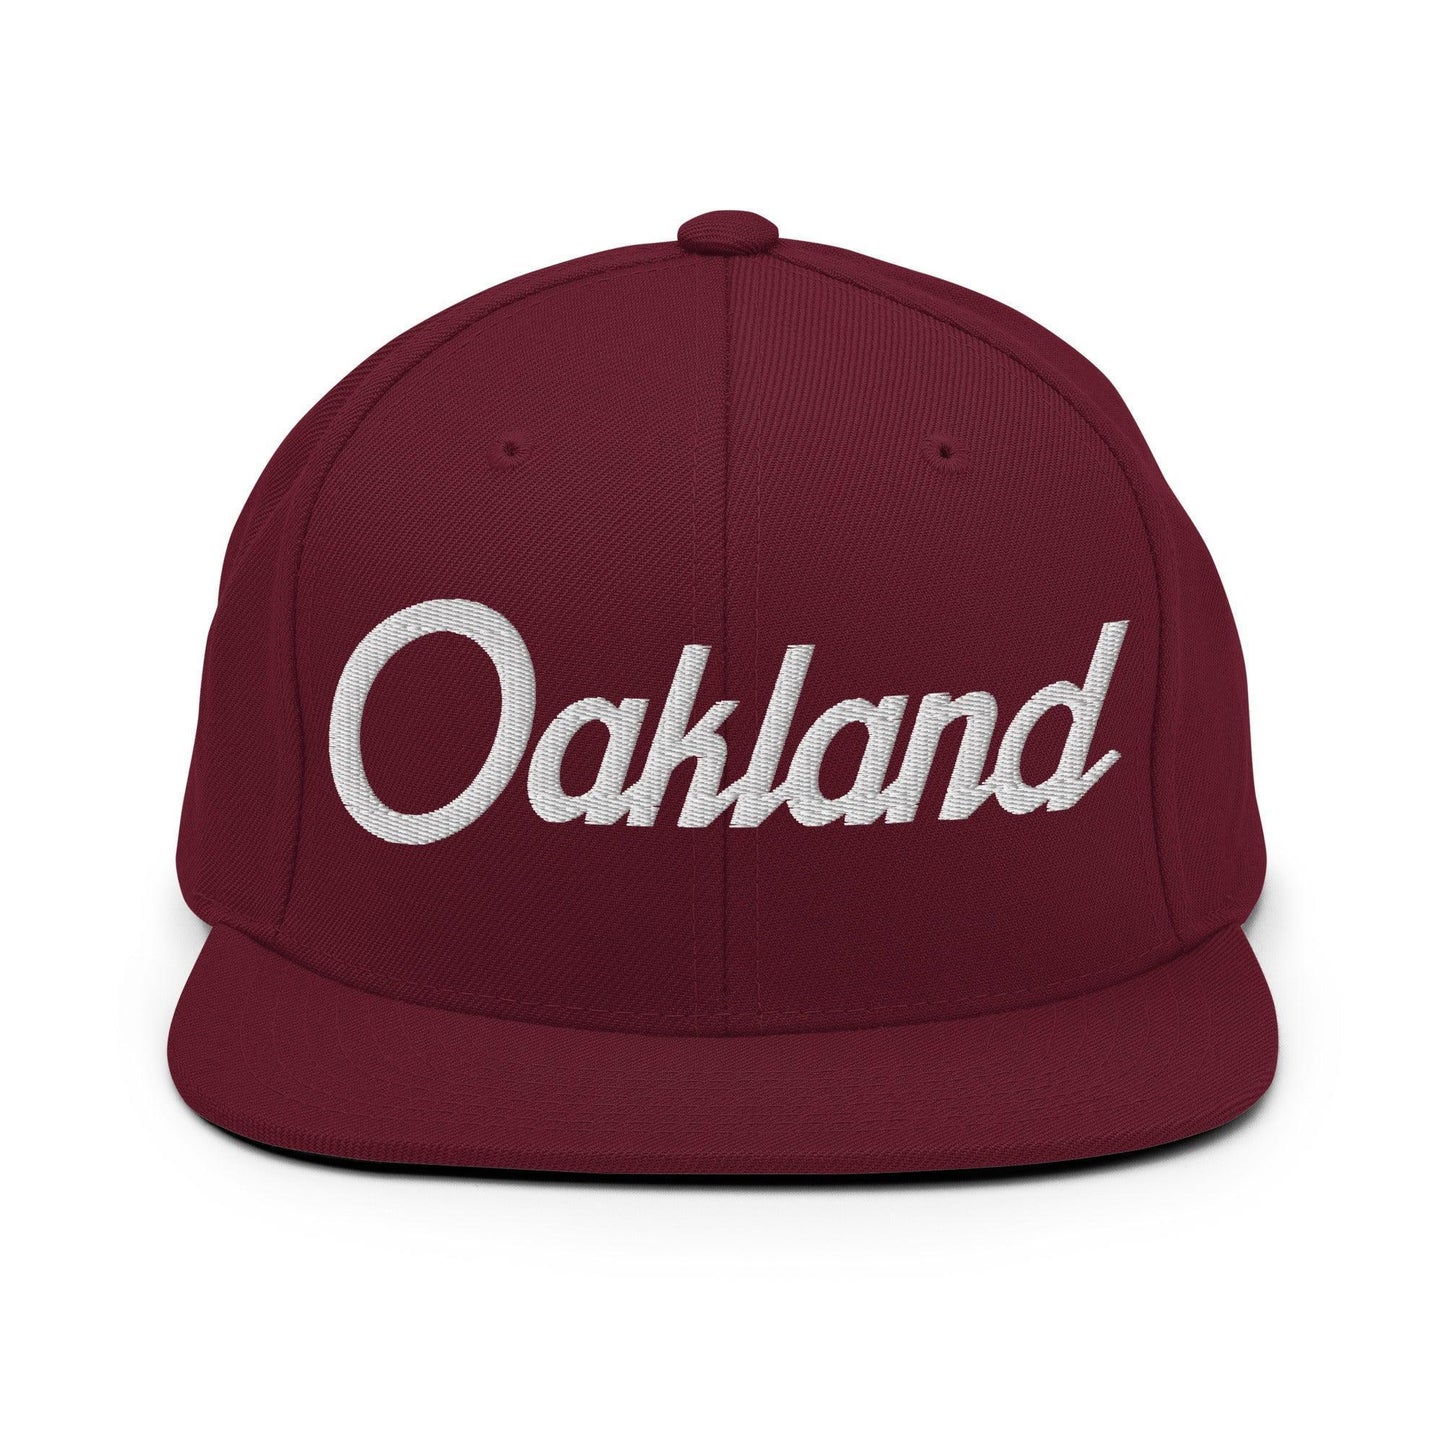 Oakland Script Snapback Hat Maroon